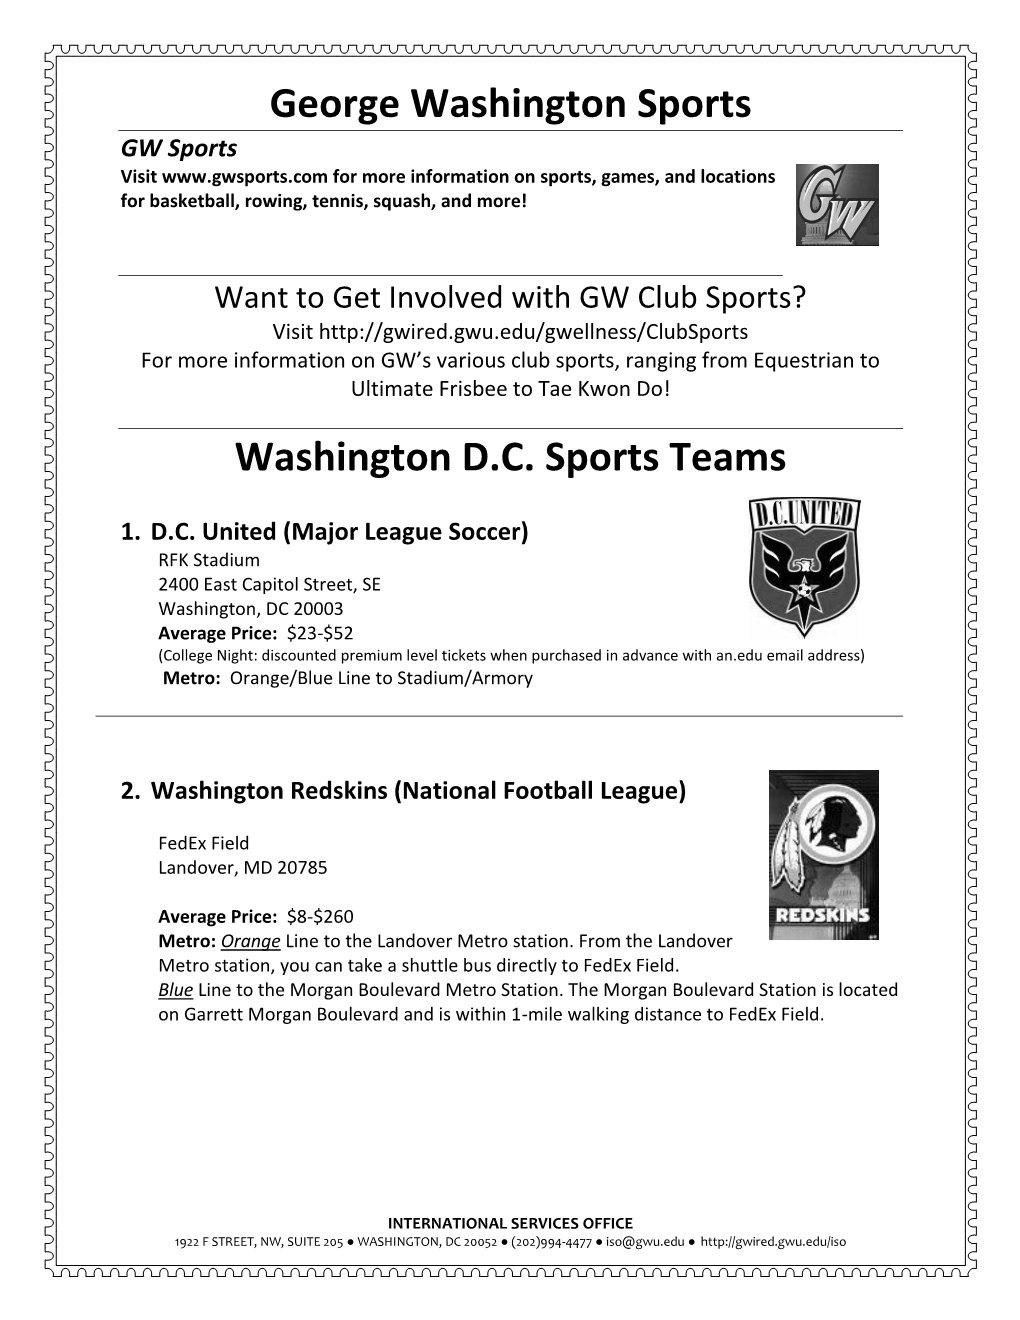 Washington Sports Teams